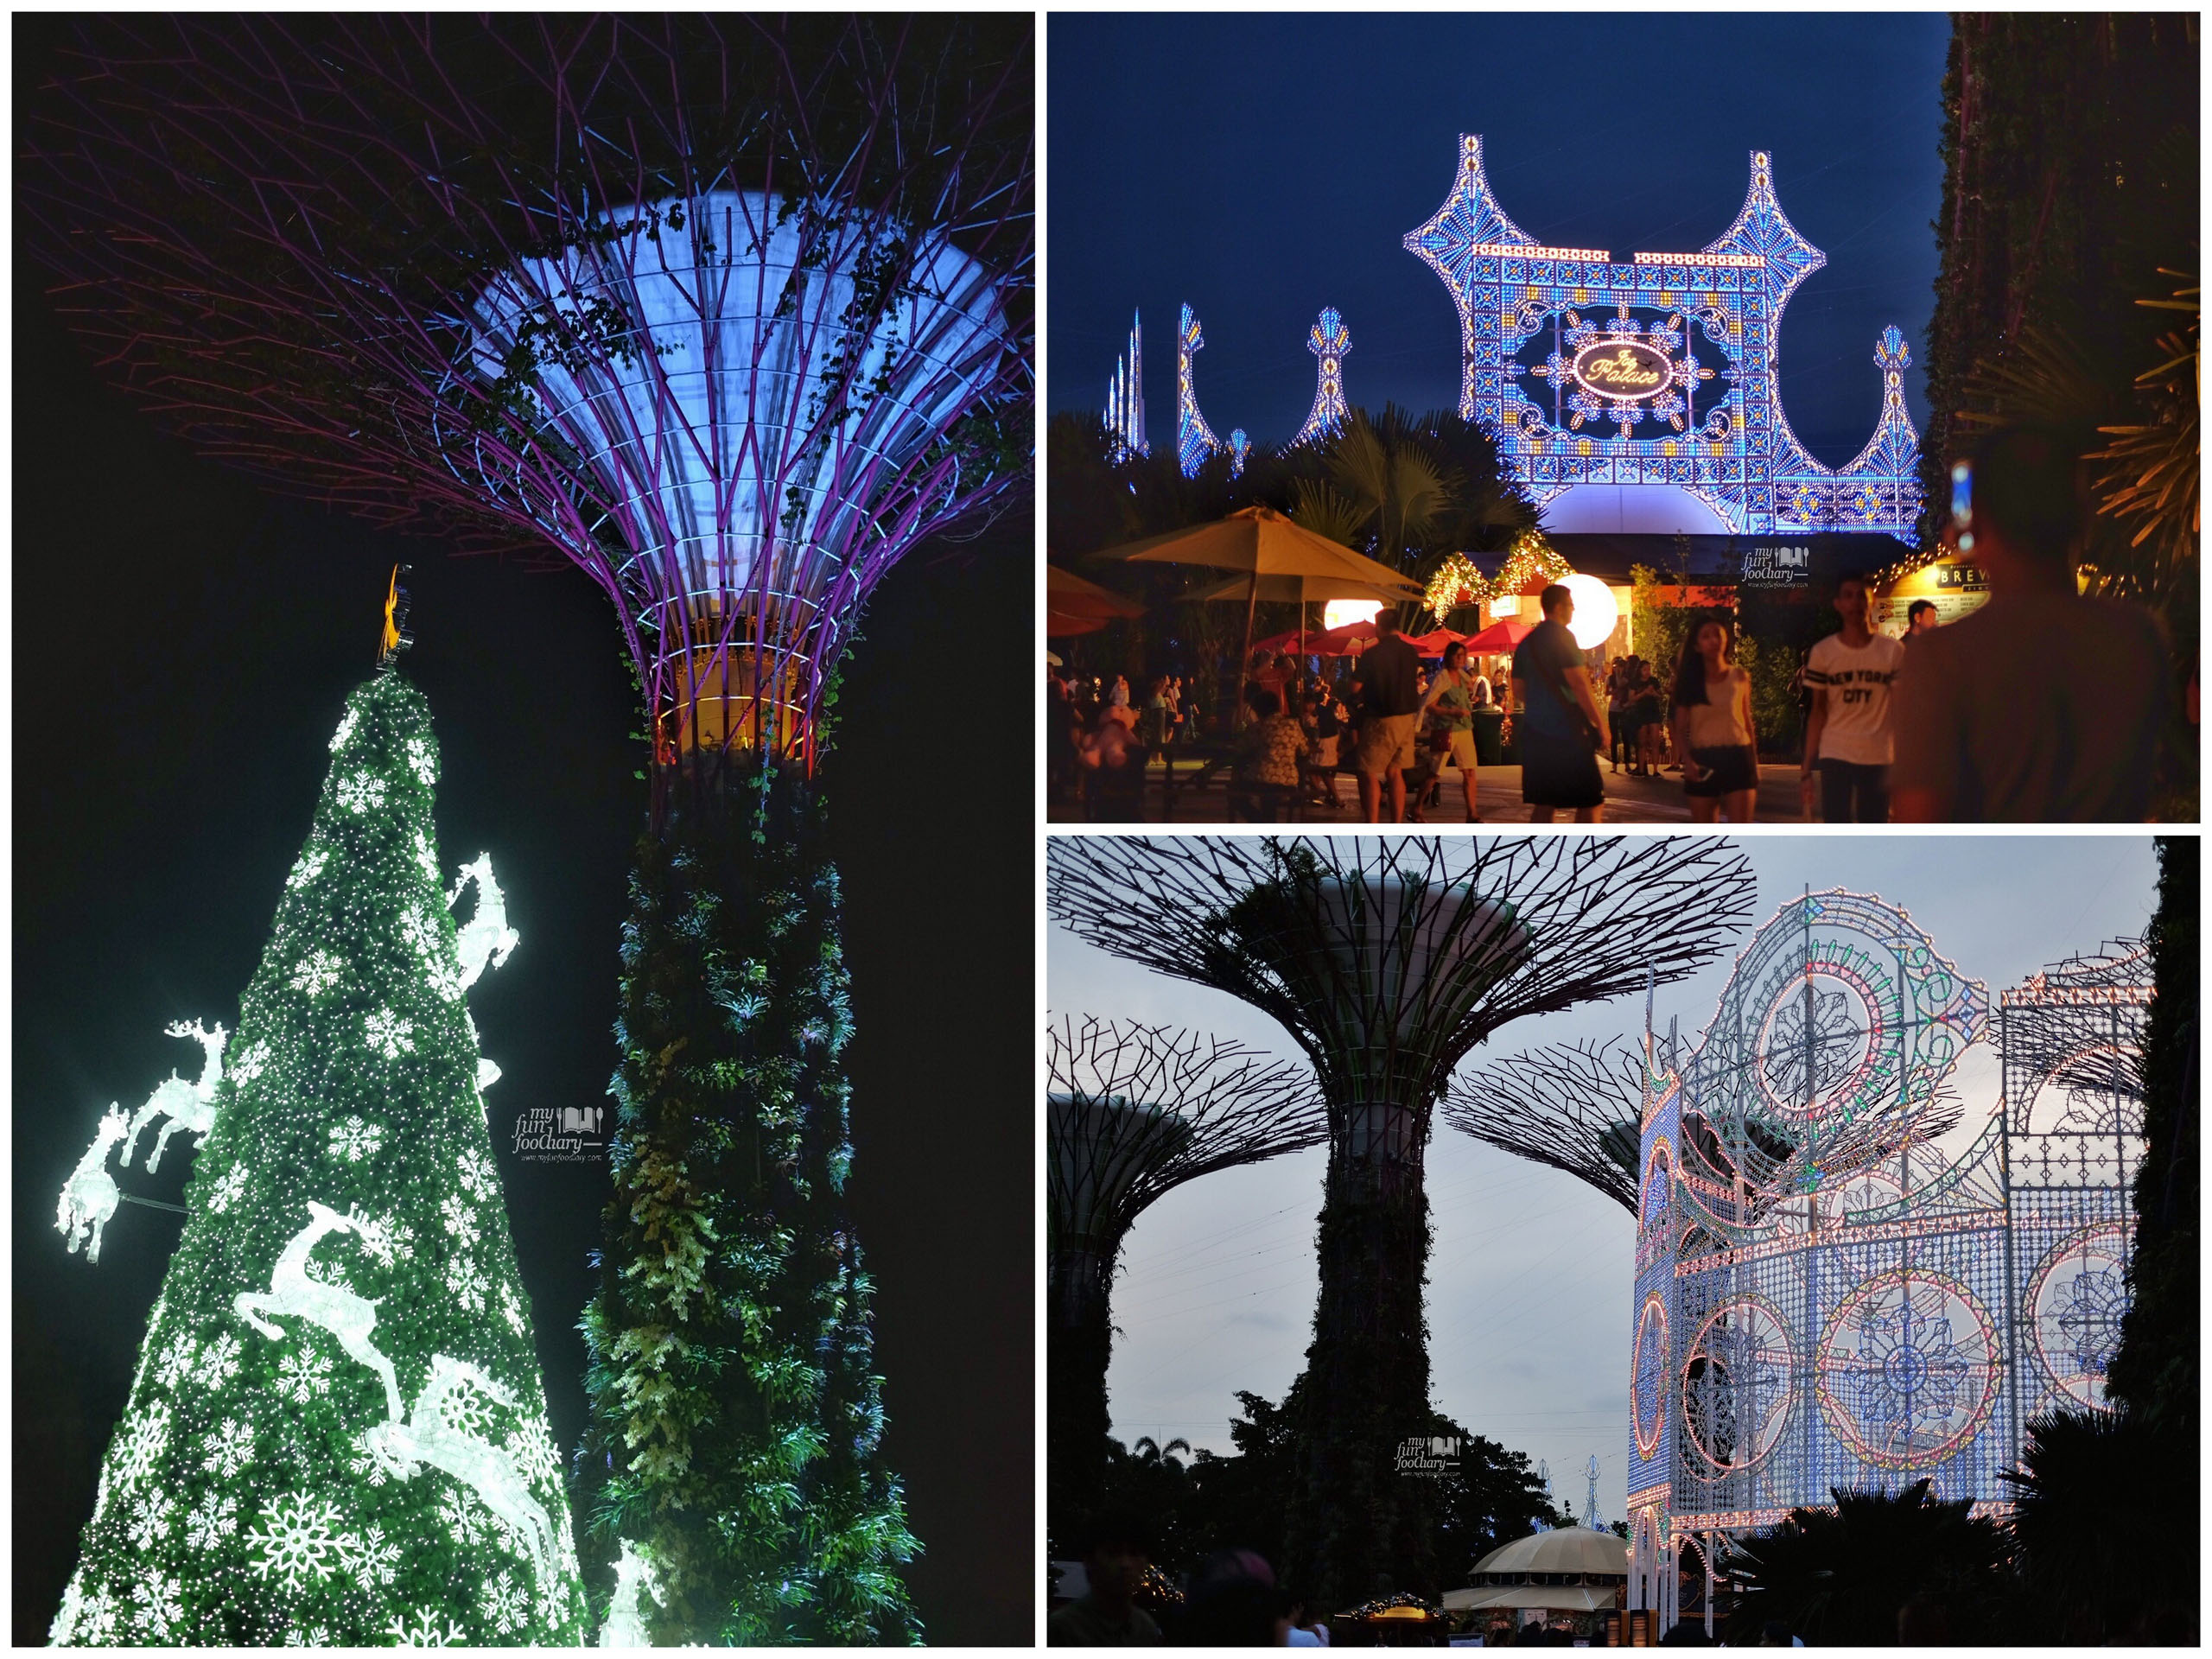 Luminaries at Christmas Wonderland - Gardens by The Bay 2015 by Myfunfoodiary